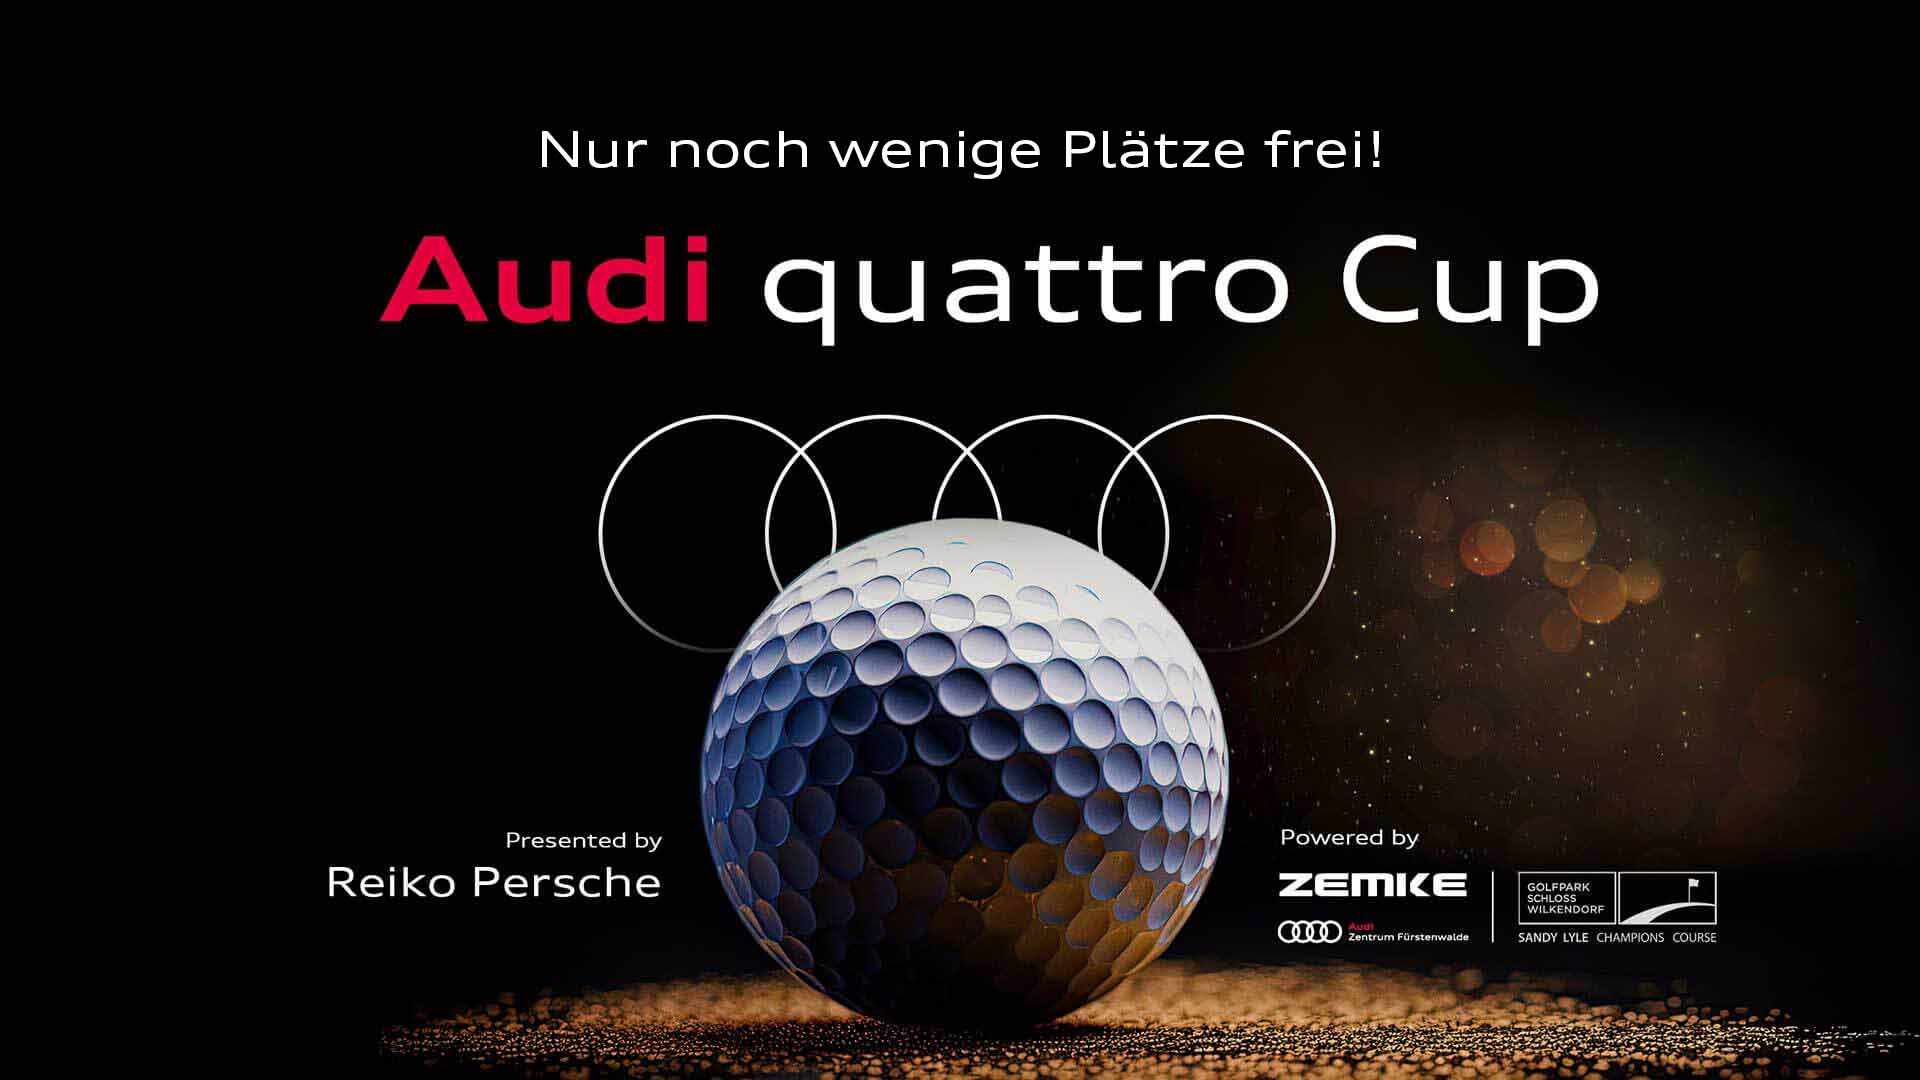 Jetzt teilnehmen: Audi quattro Cup